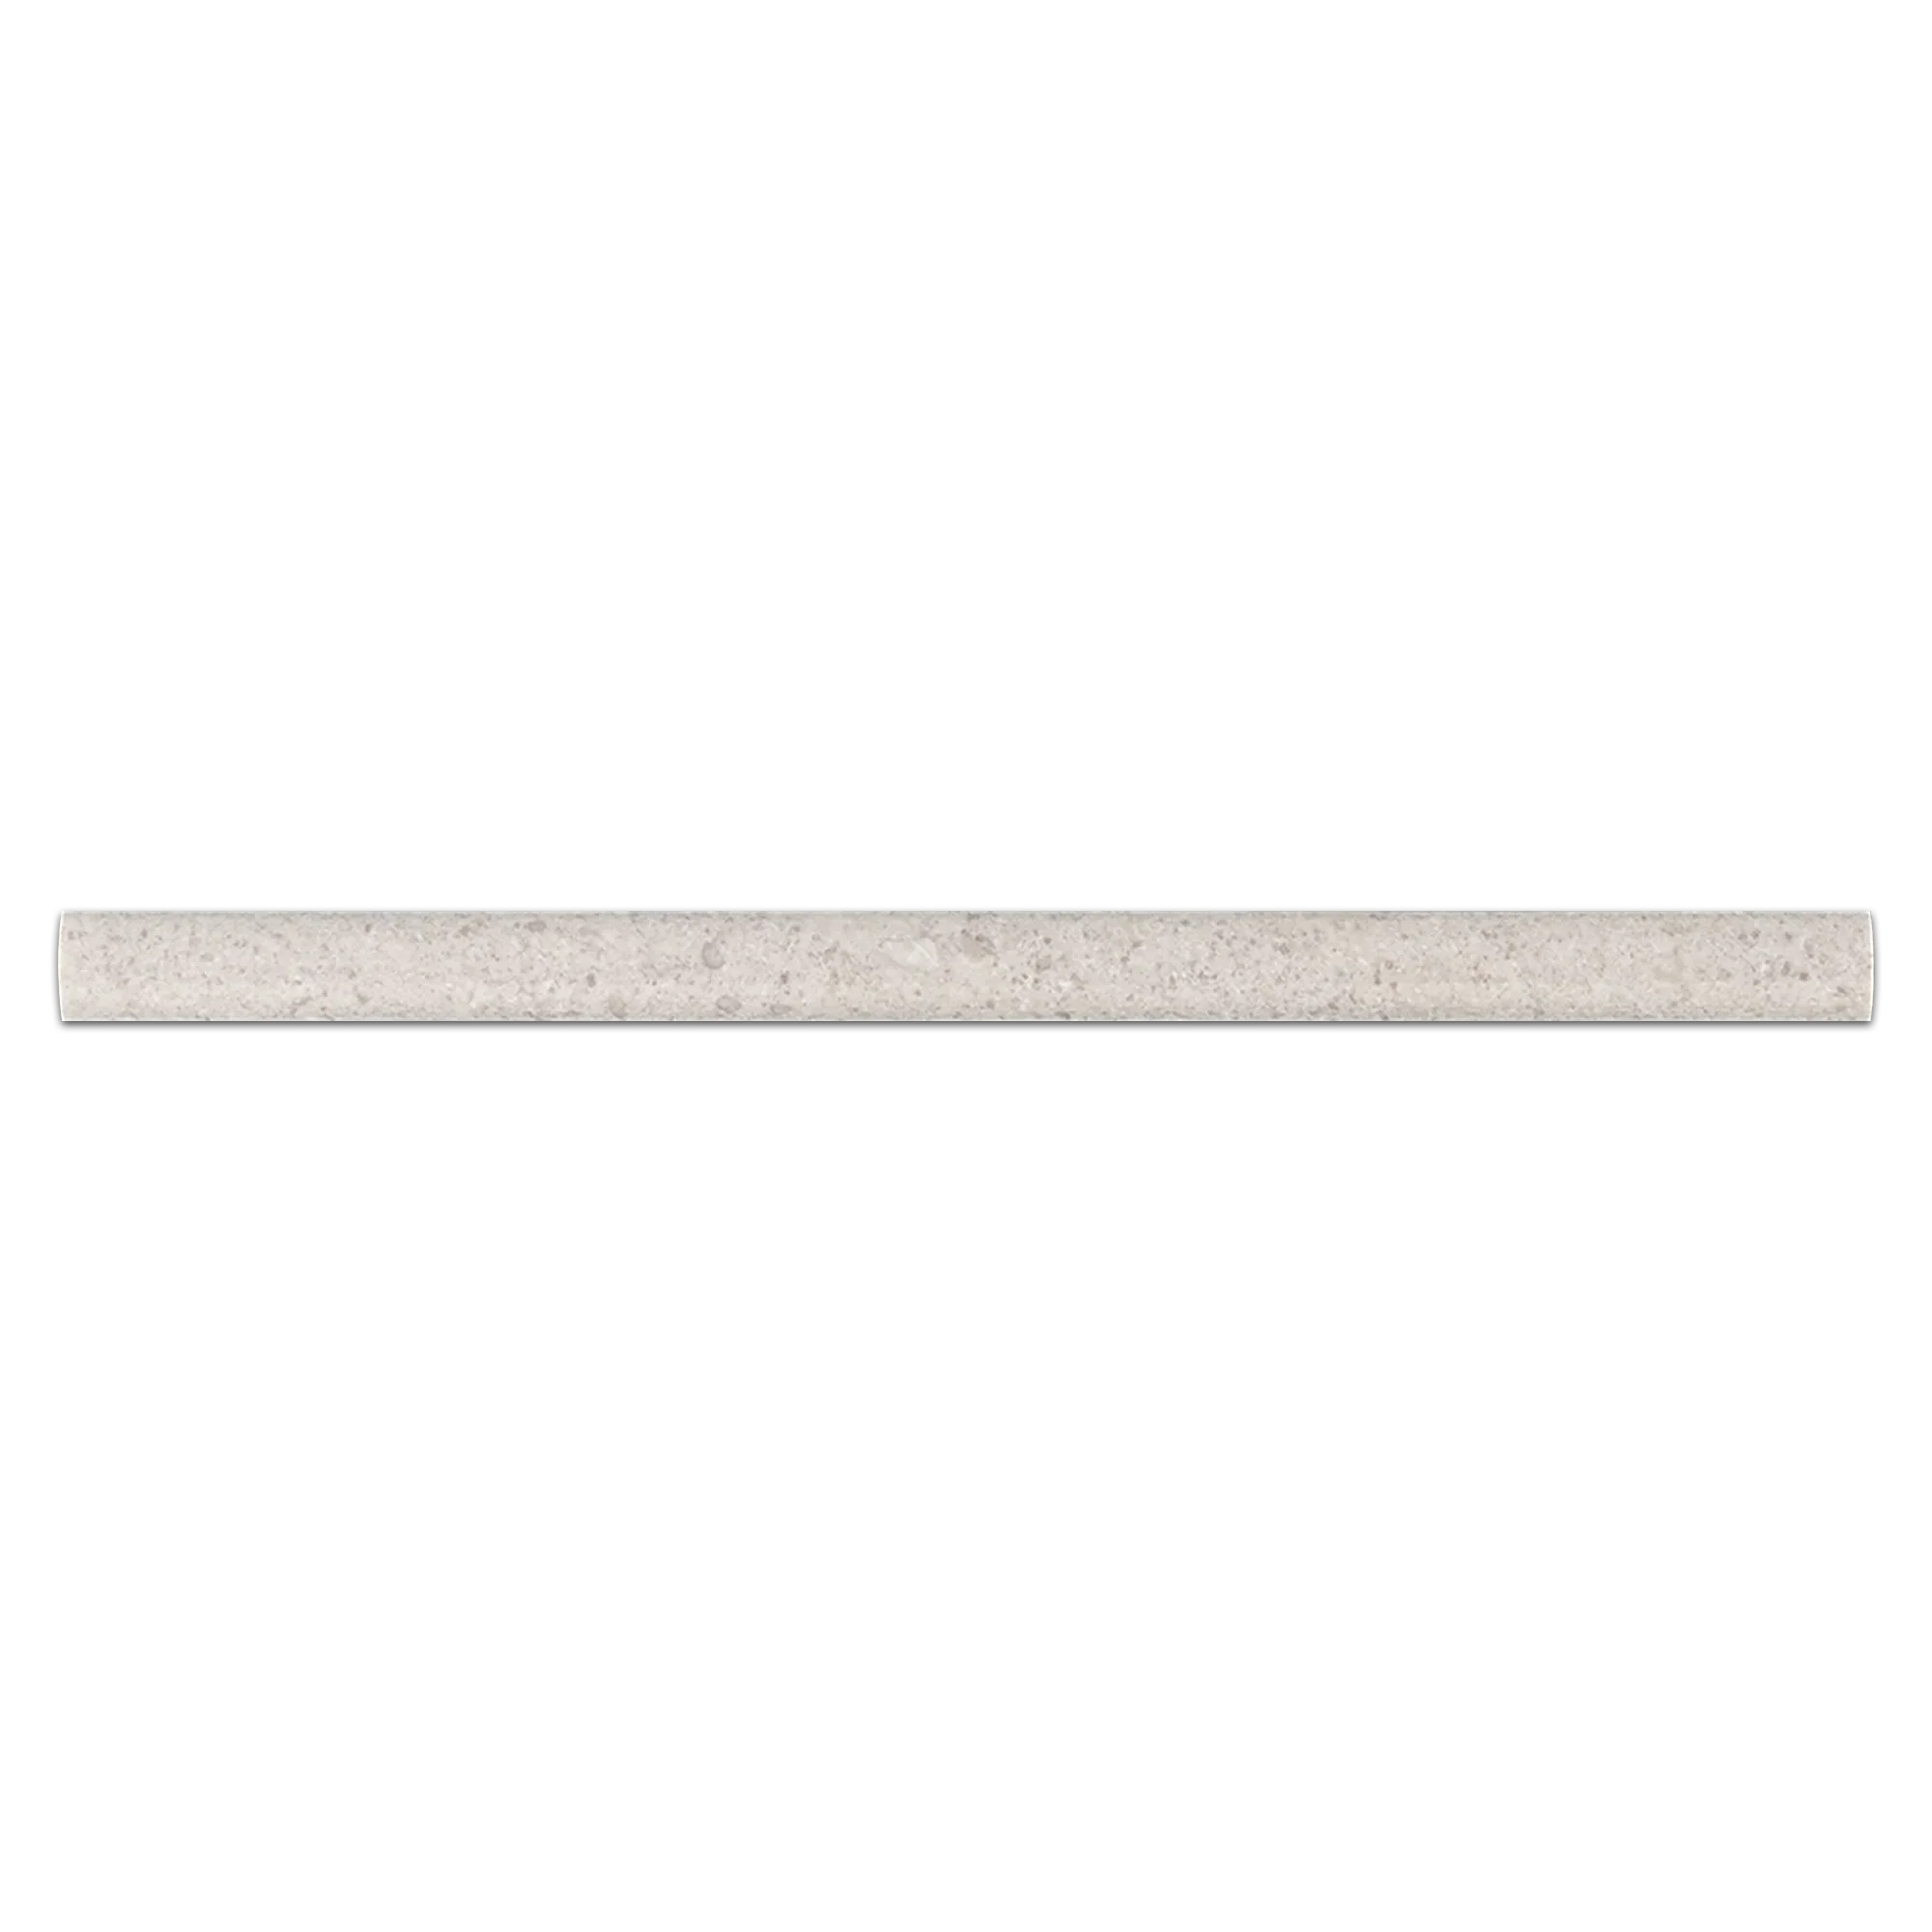 Elon Sand Dollar Marble Pencil Tile 0.75x12x0.75 Polished - Surface Group International Product